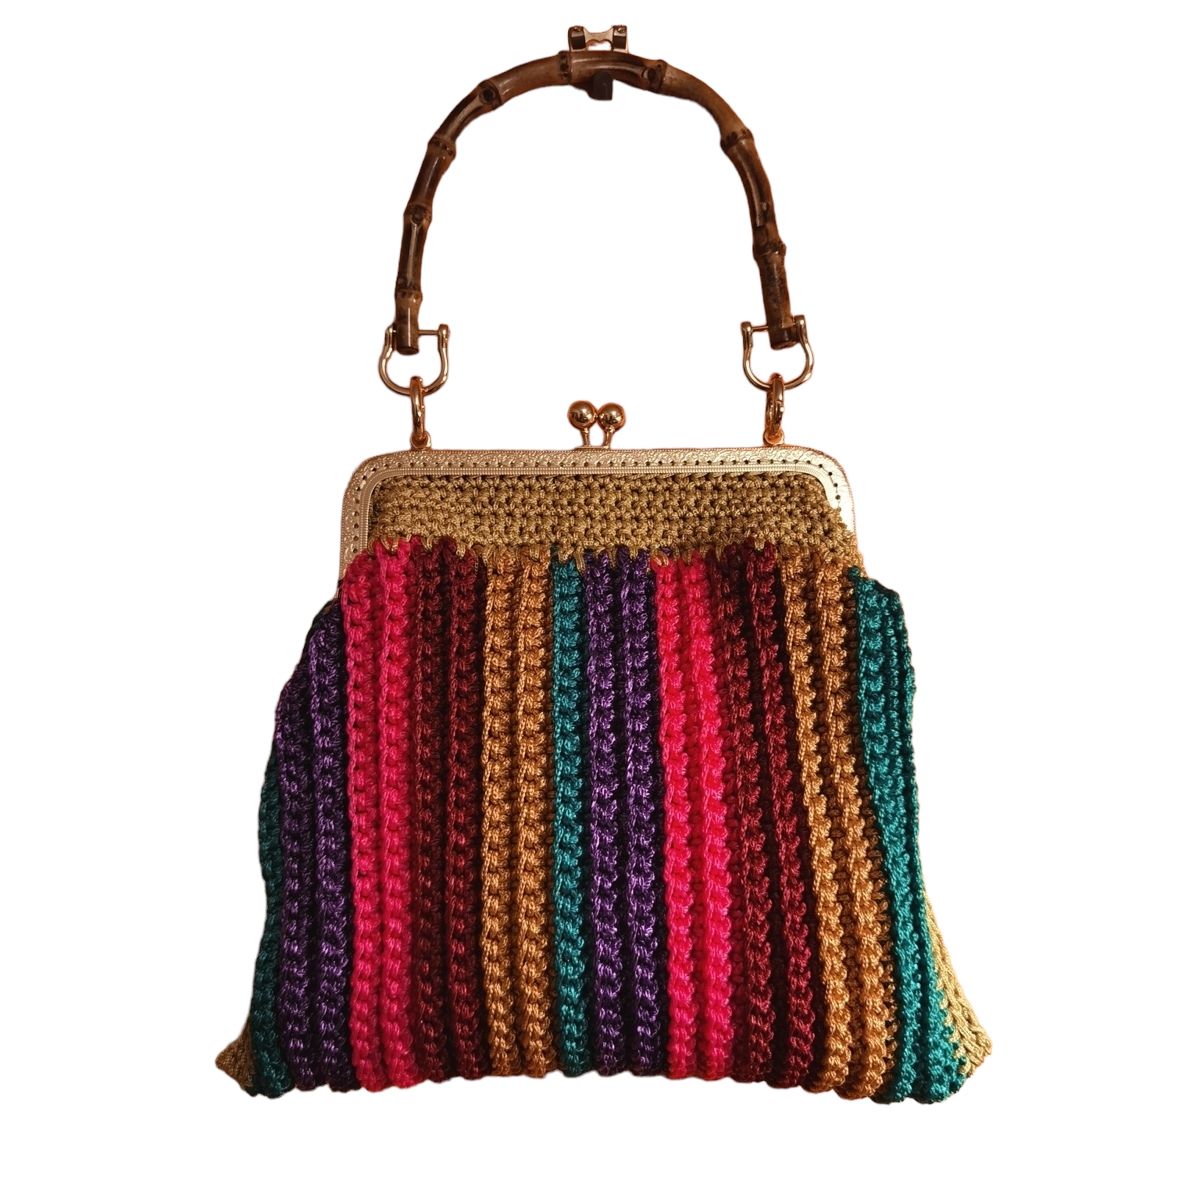 Custommade" "Στελίνα ΙΙ" πολύχρωμη τσάντα vintage style